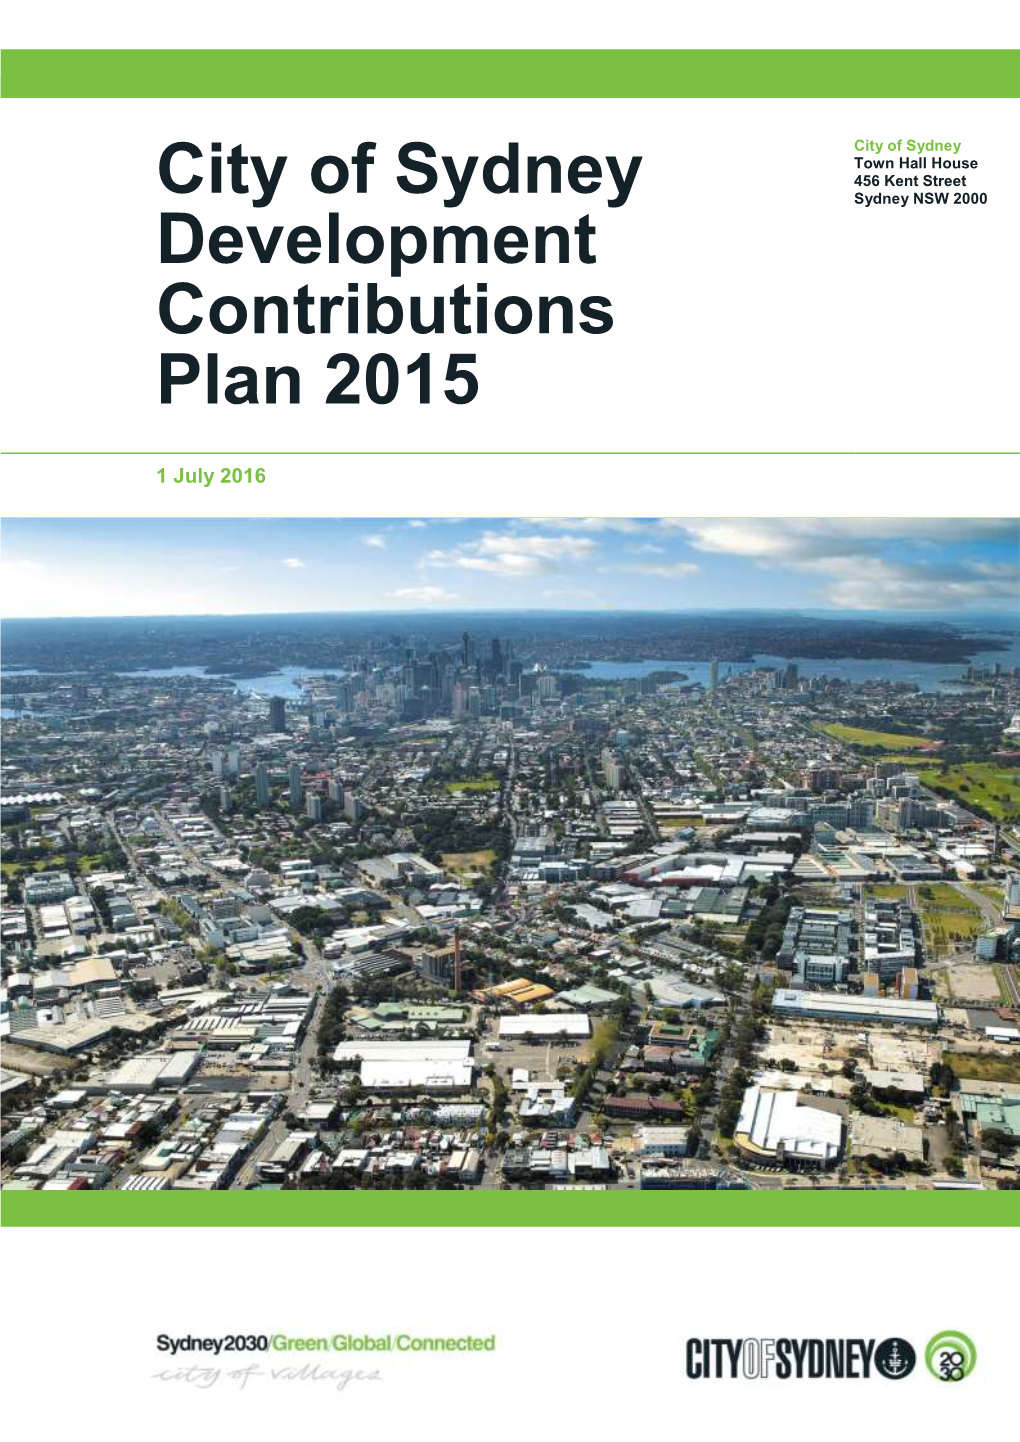 City of Sydney Development Contributions Plan 2015 Executive Summary